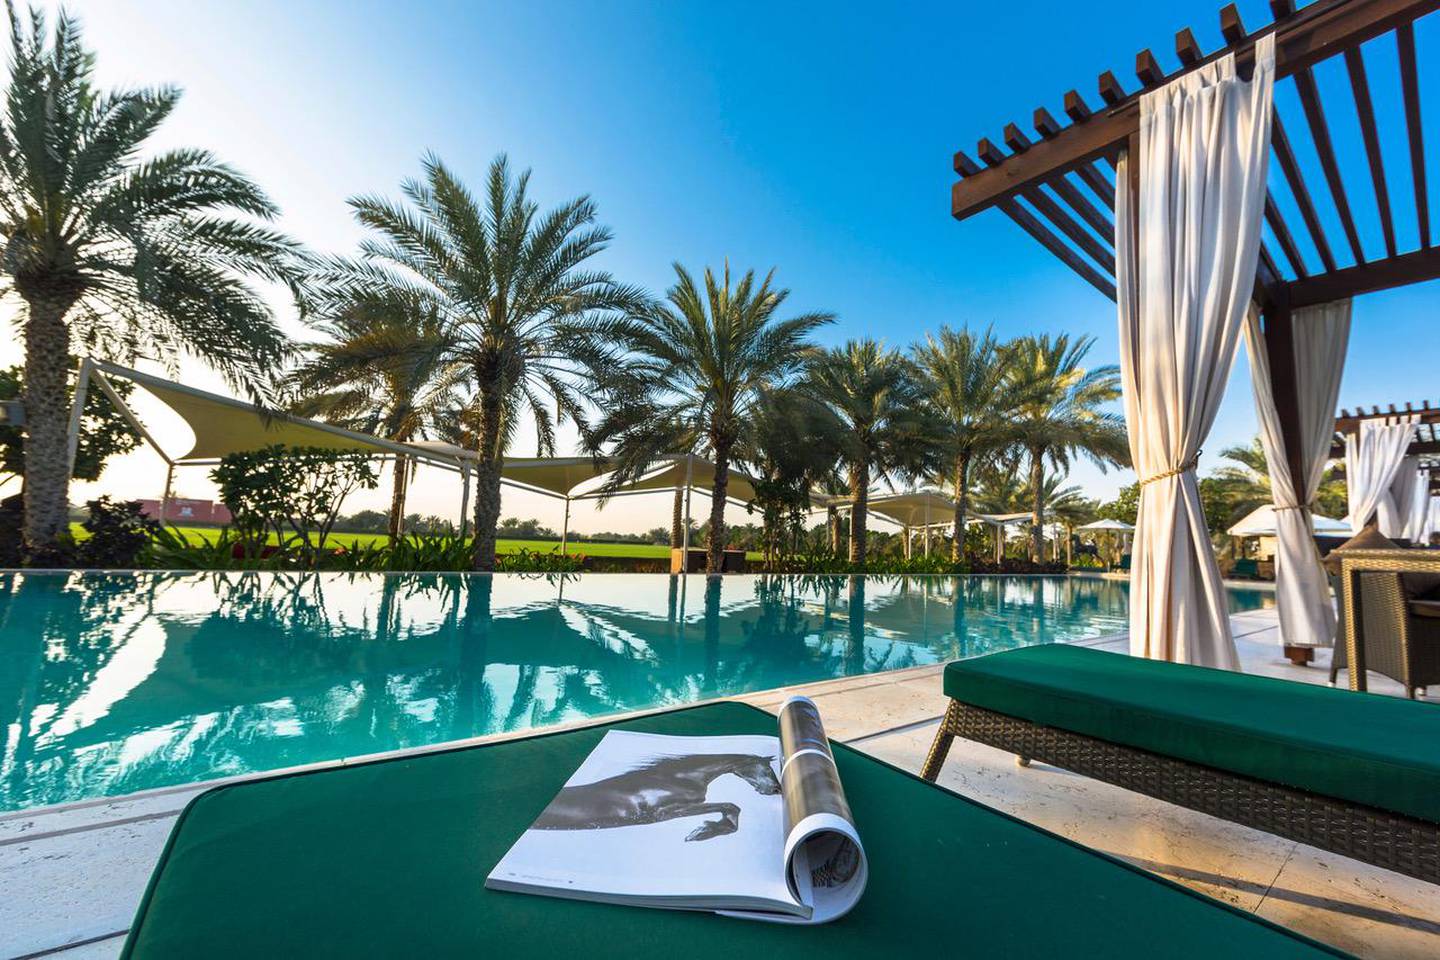 The resort has a large infinity pool. Courtesy of Melia Desert Palm Dubai